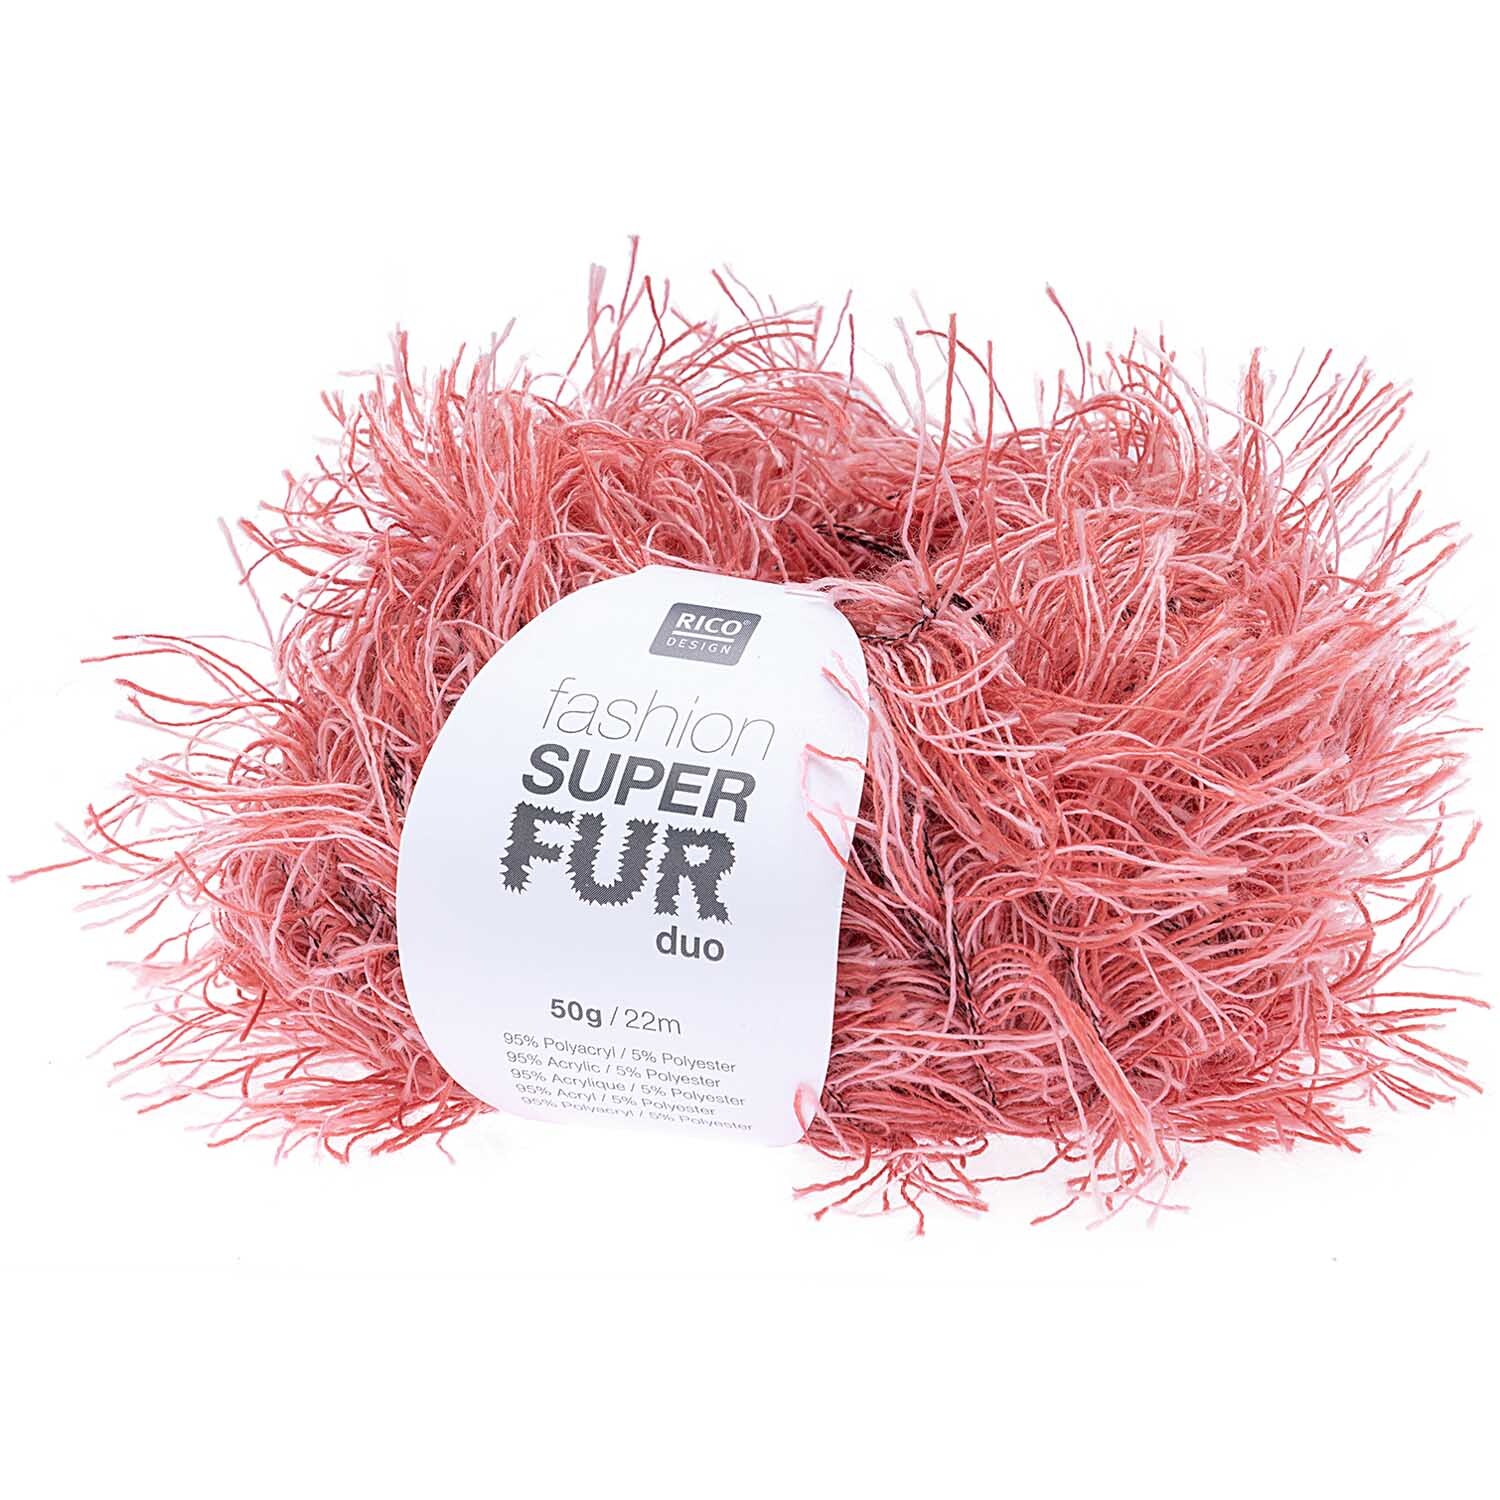 Fashion Super Fur Duo